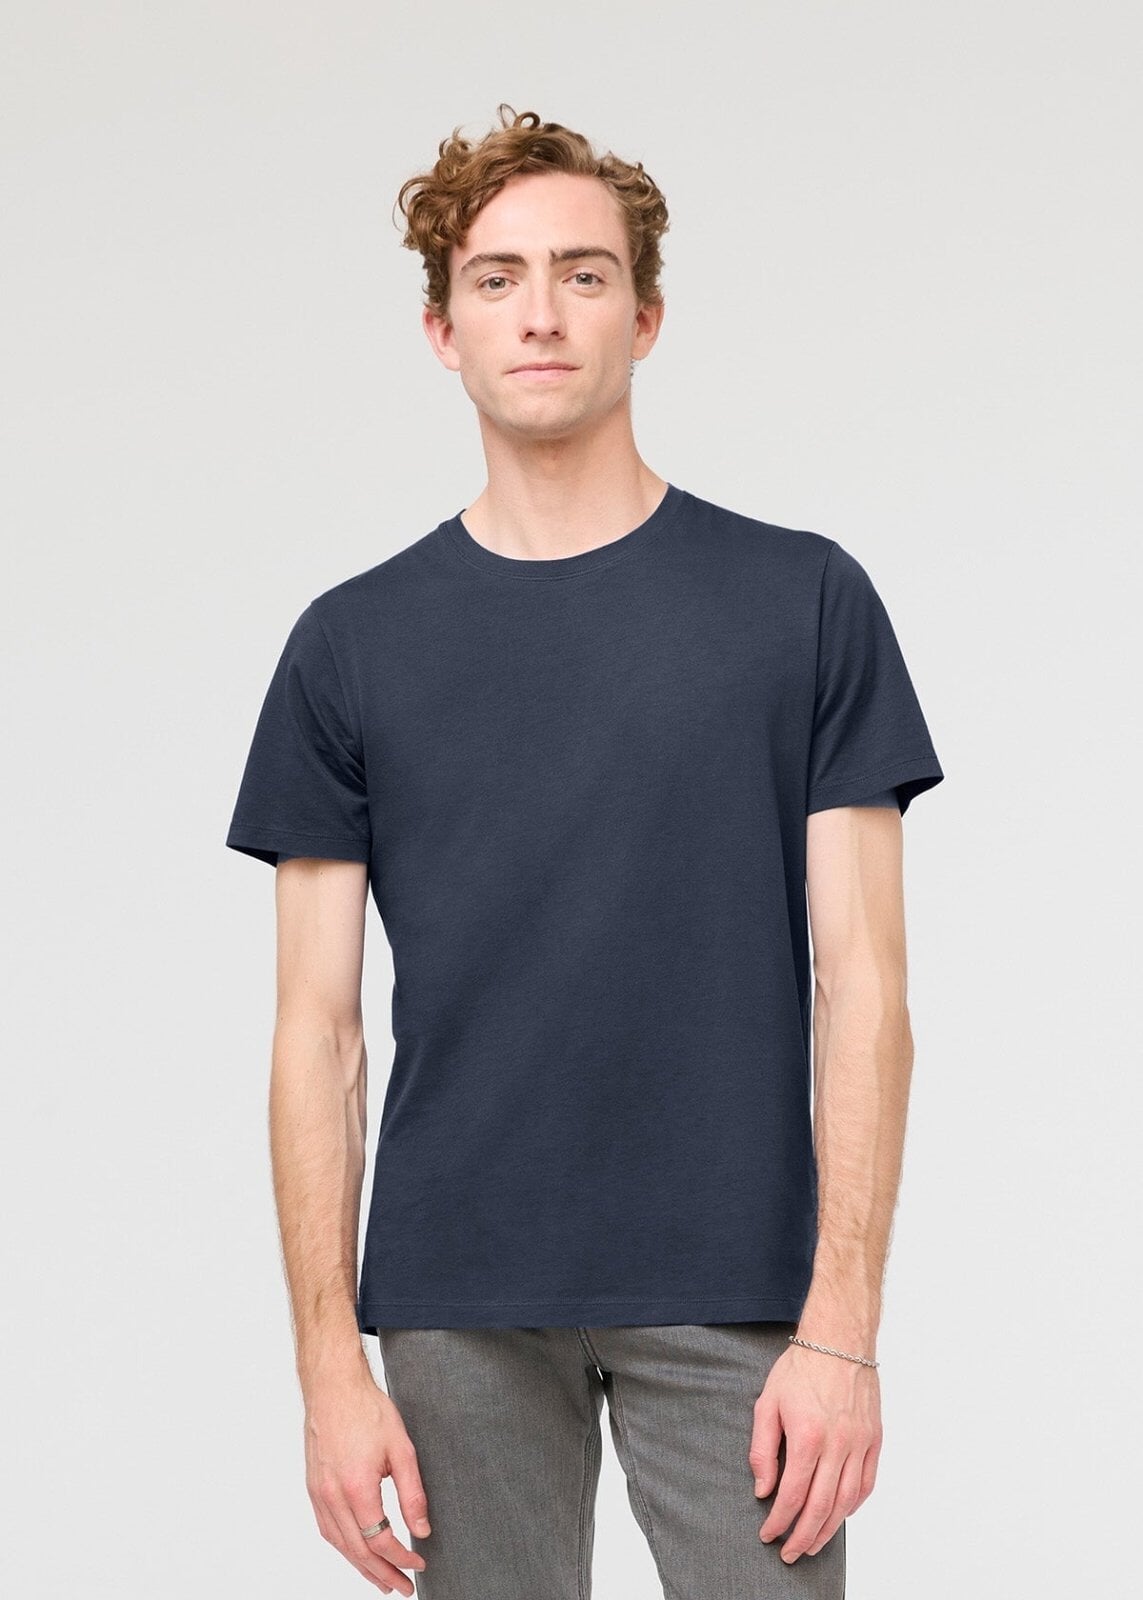 mens 100% pima cotton navy t-shirt front